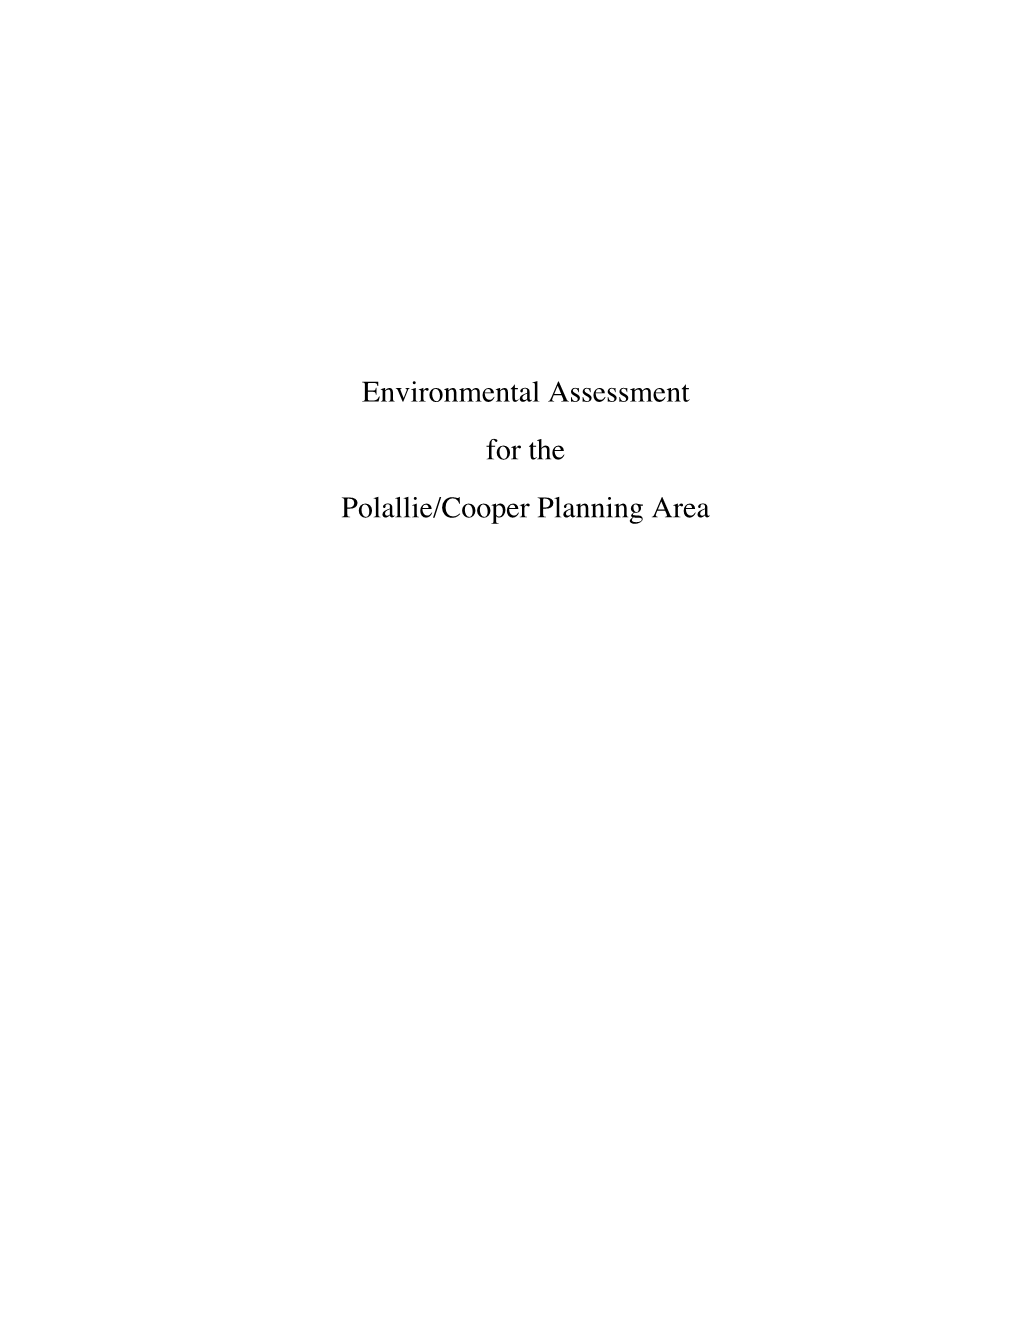 Environmental Assessment for the Polallie/Cooper Planning Area